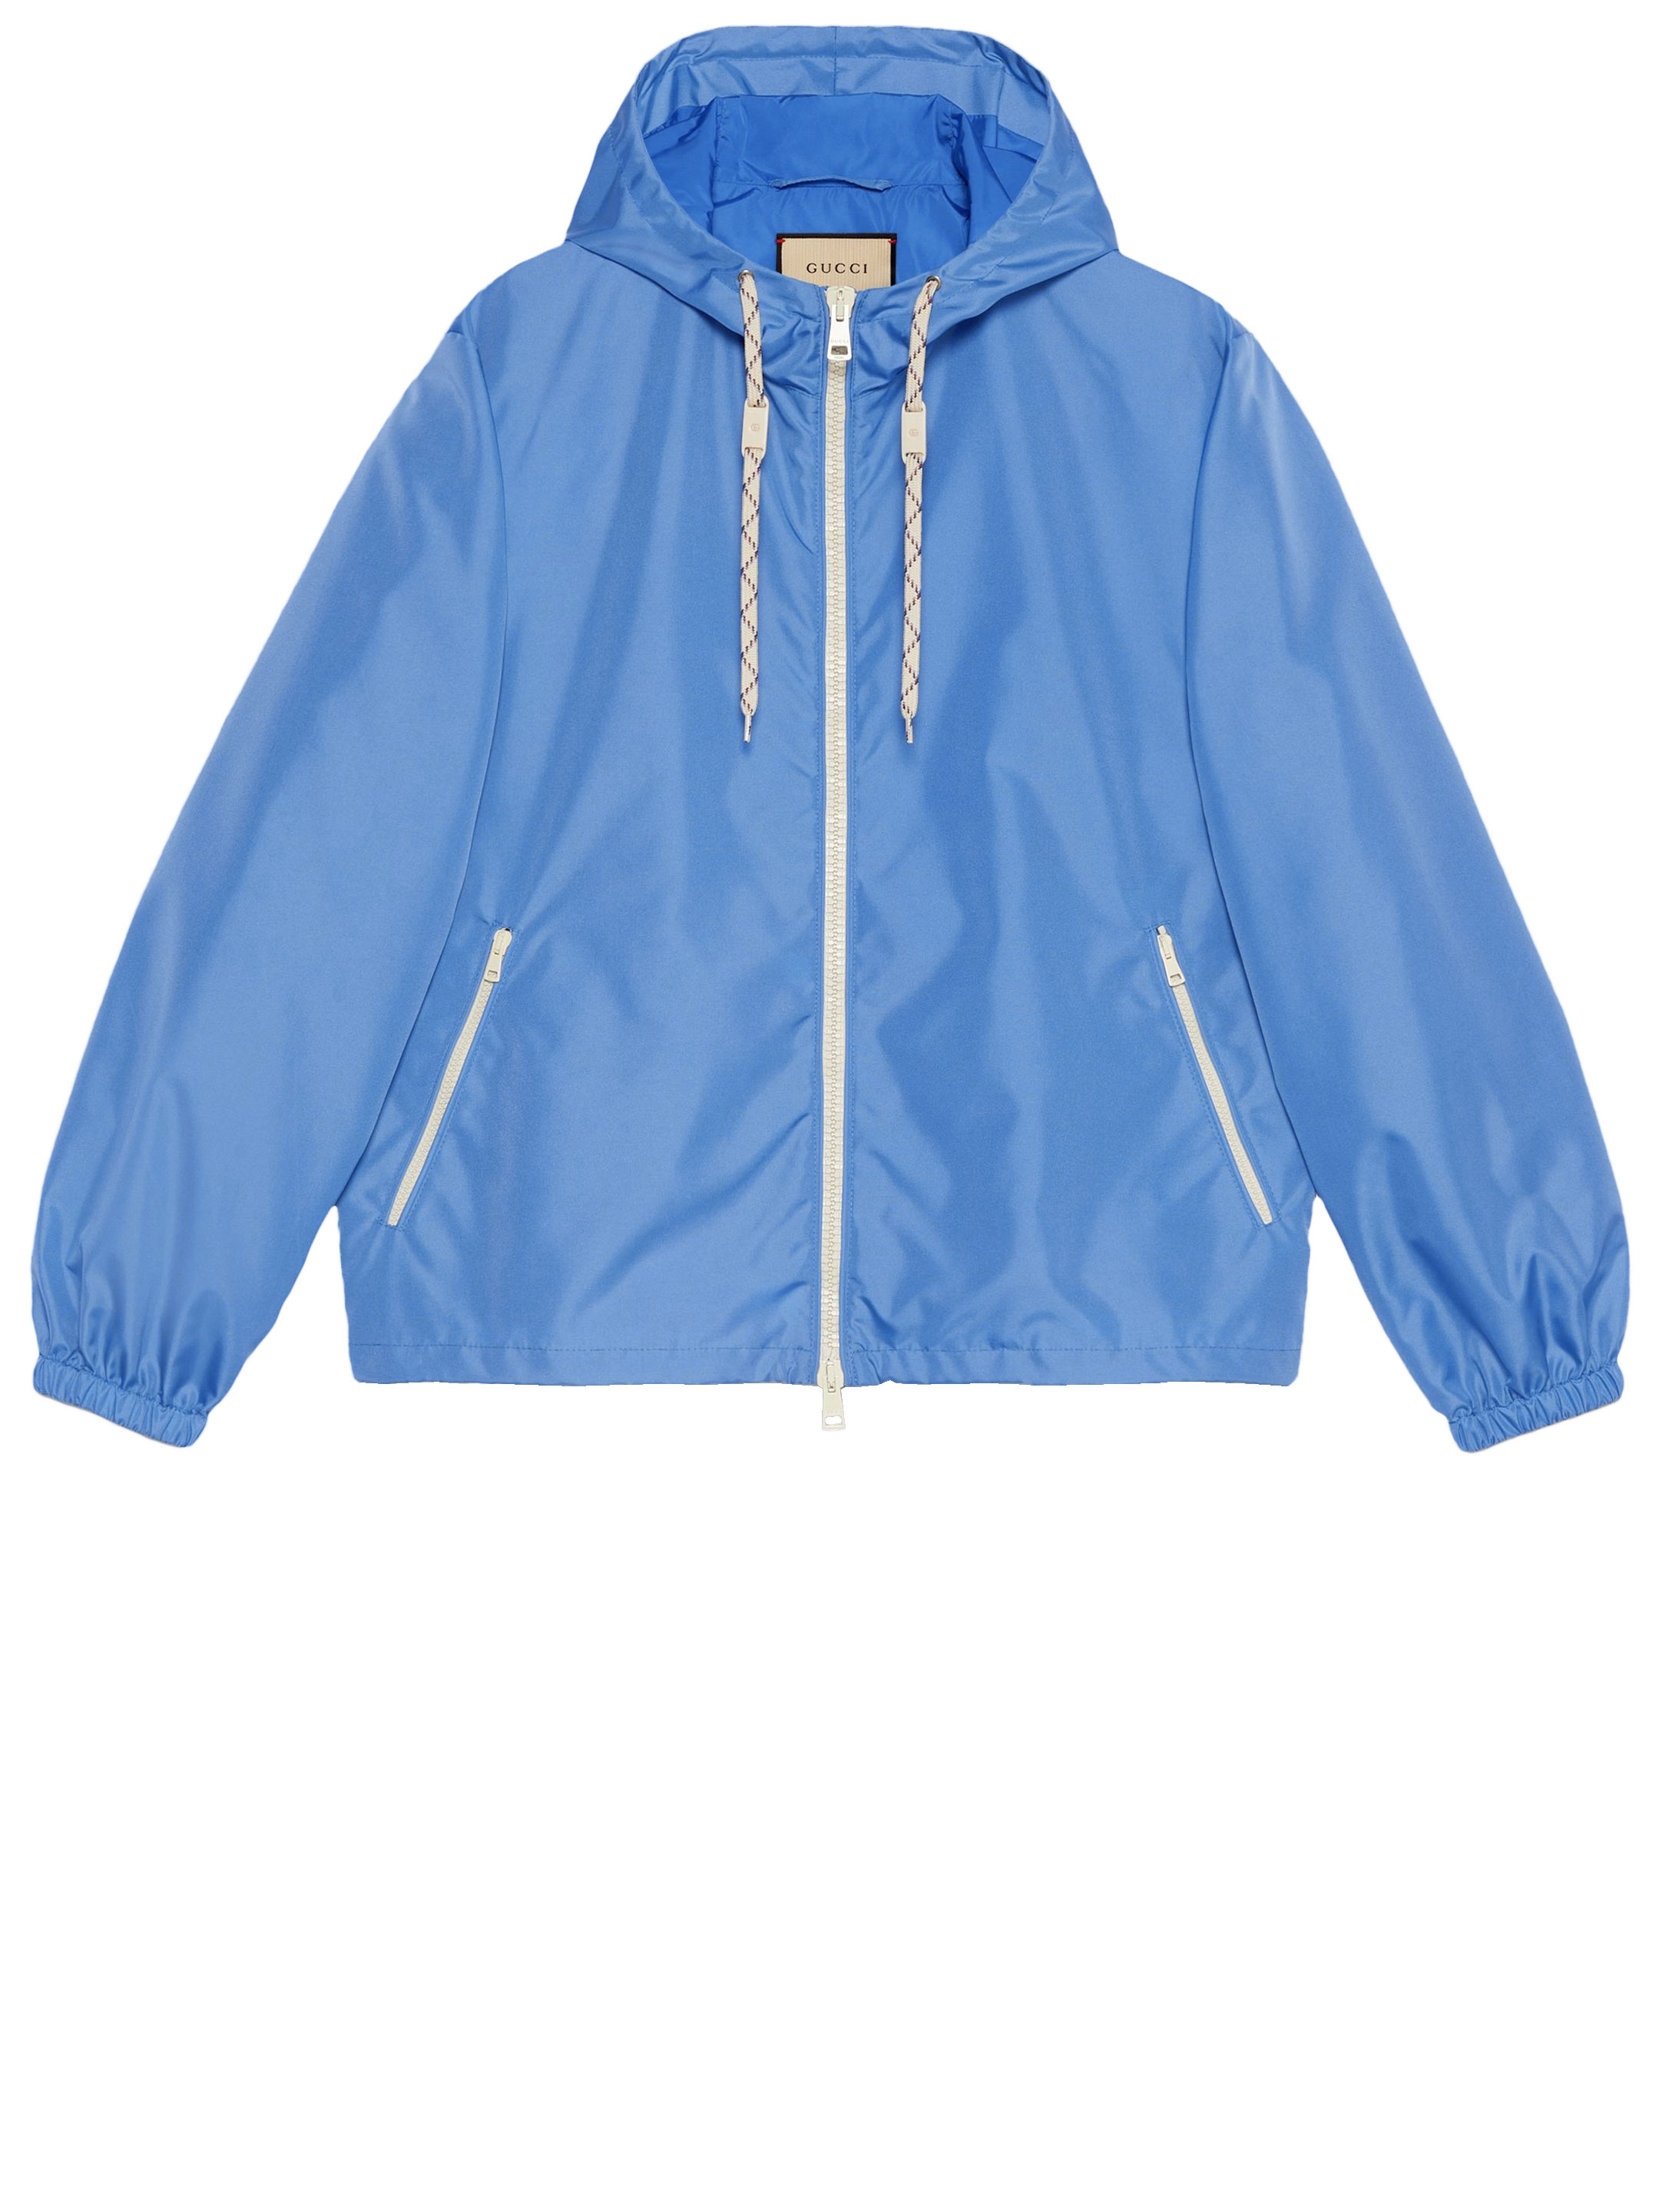 Куртка Gucci Nylon, синий куртка gucci reversible ripstop nylon черный